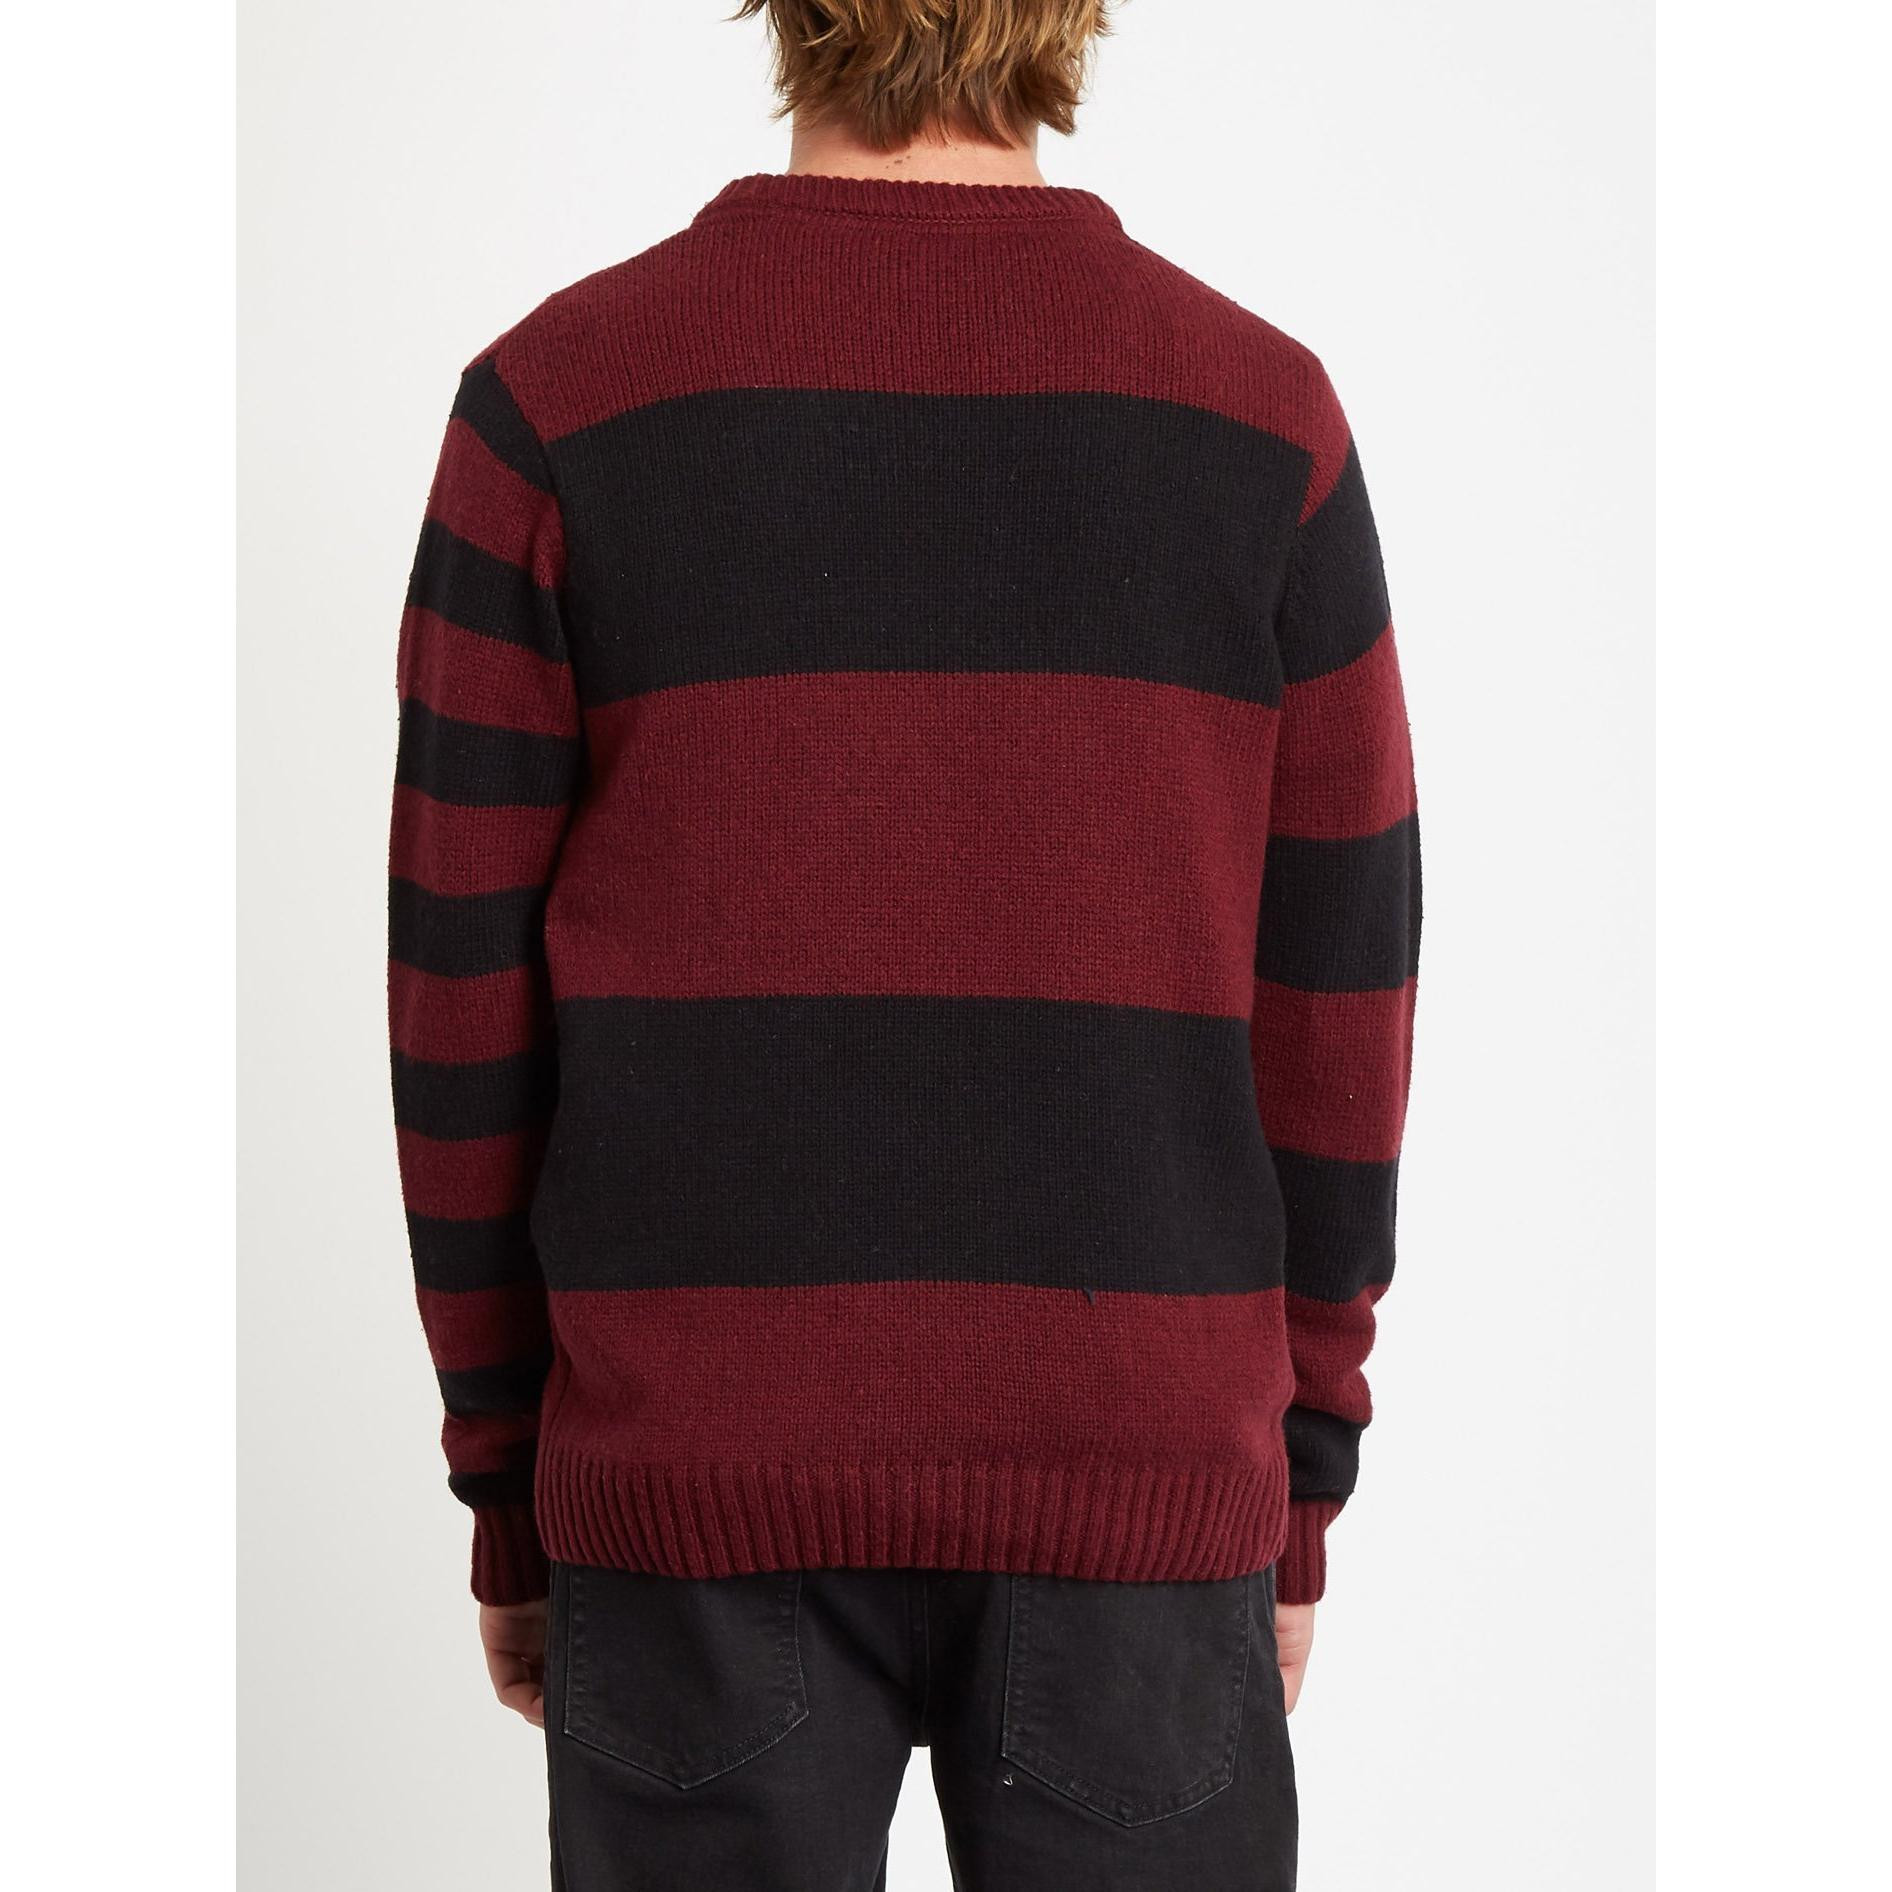 Volcom Edmonder Striped Sweater Port Men - Free Delivery!